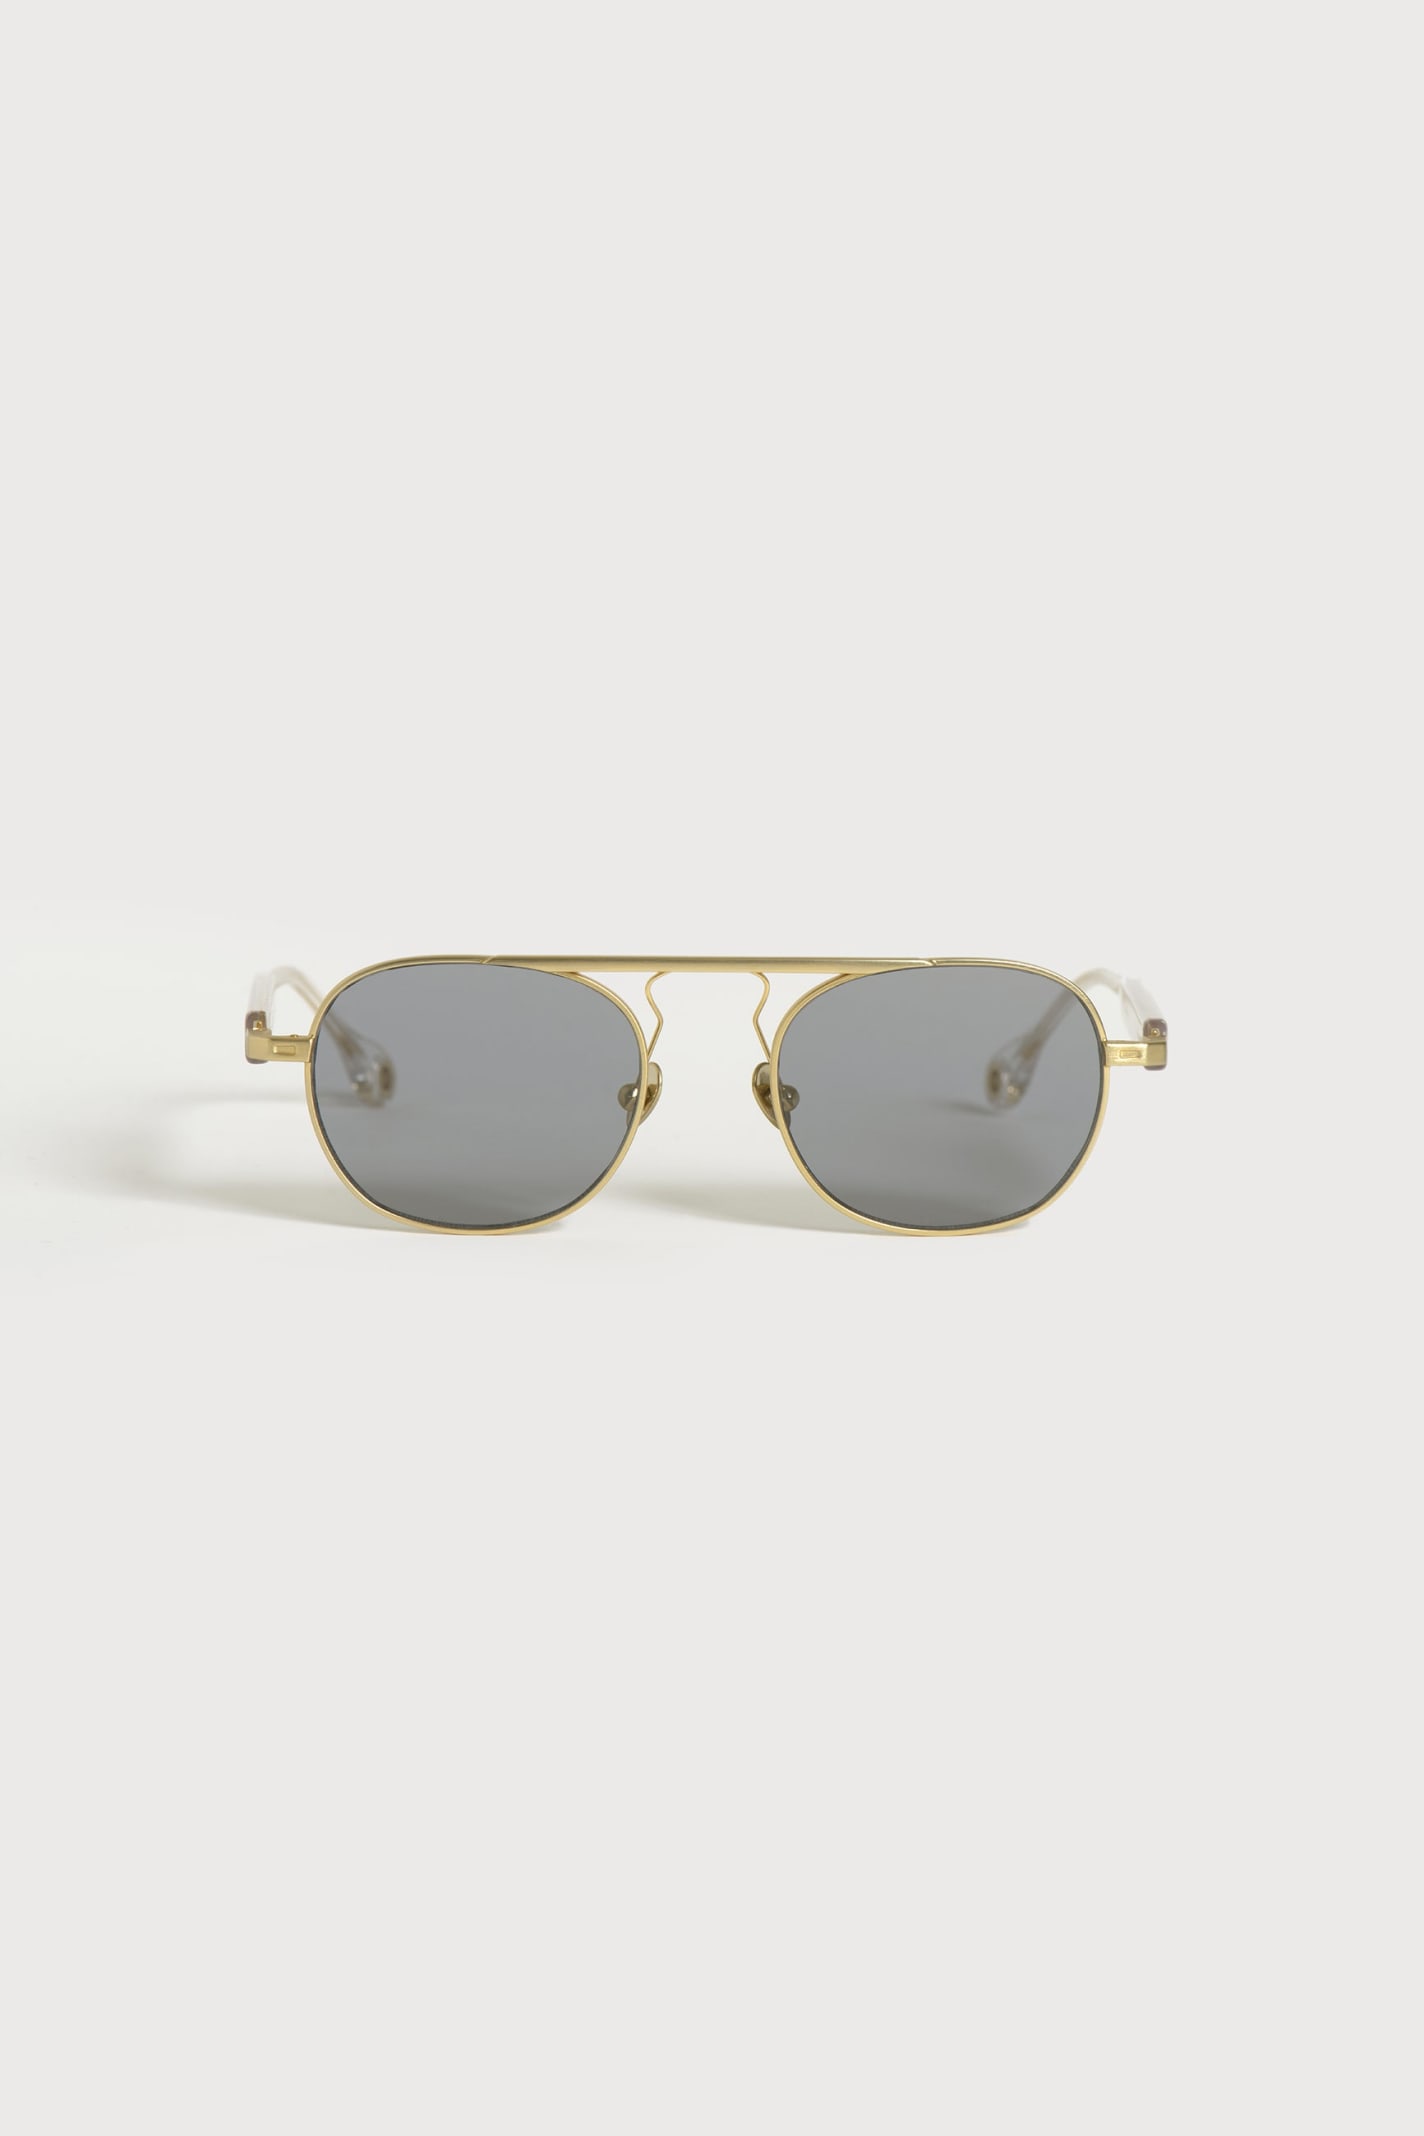 Etudes Studio Candidate-gold Cr Sunglasses Sunglasses In Colour Gold